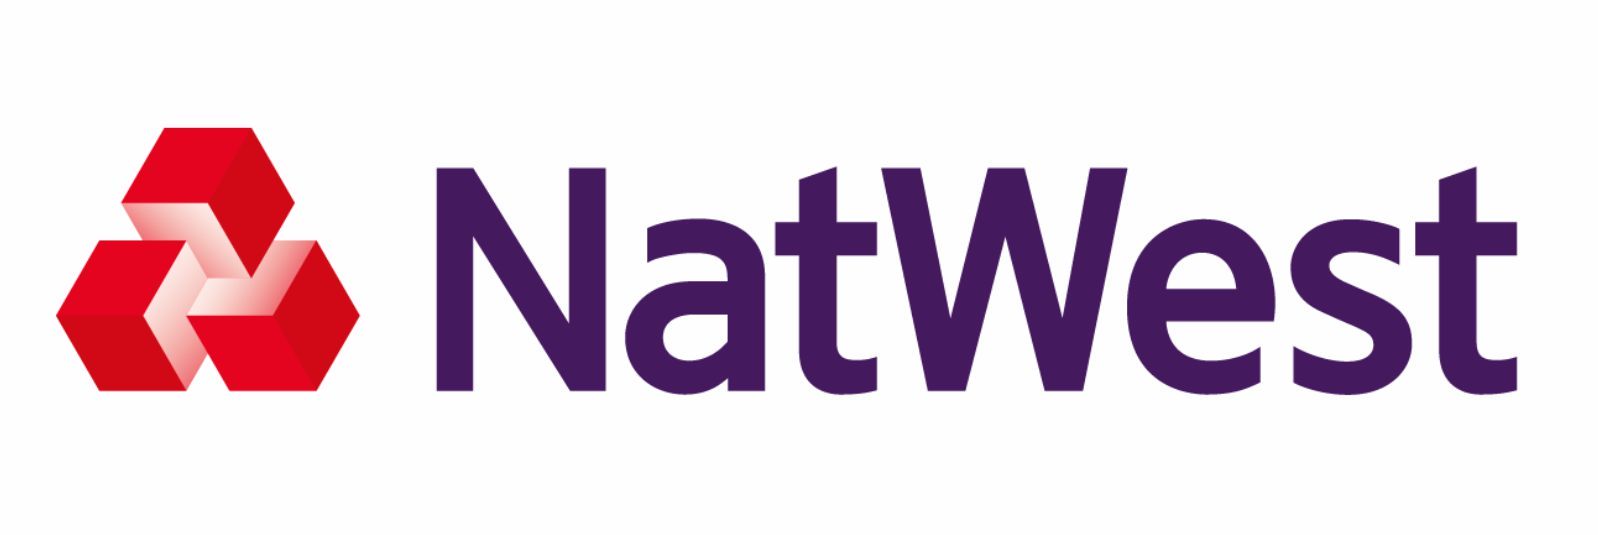 Natwest web.jpg